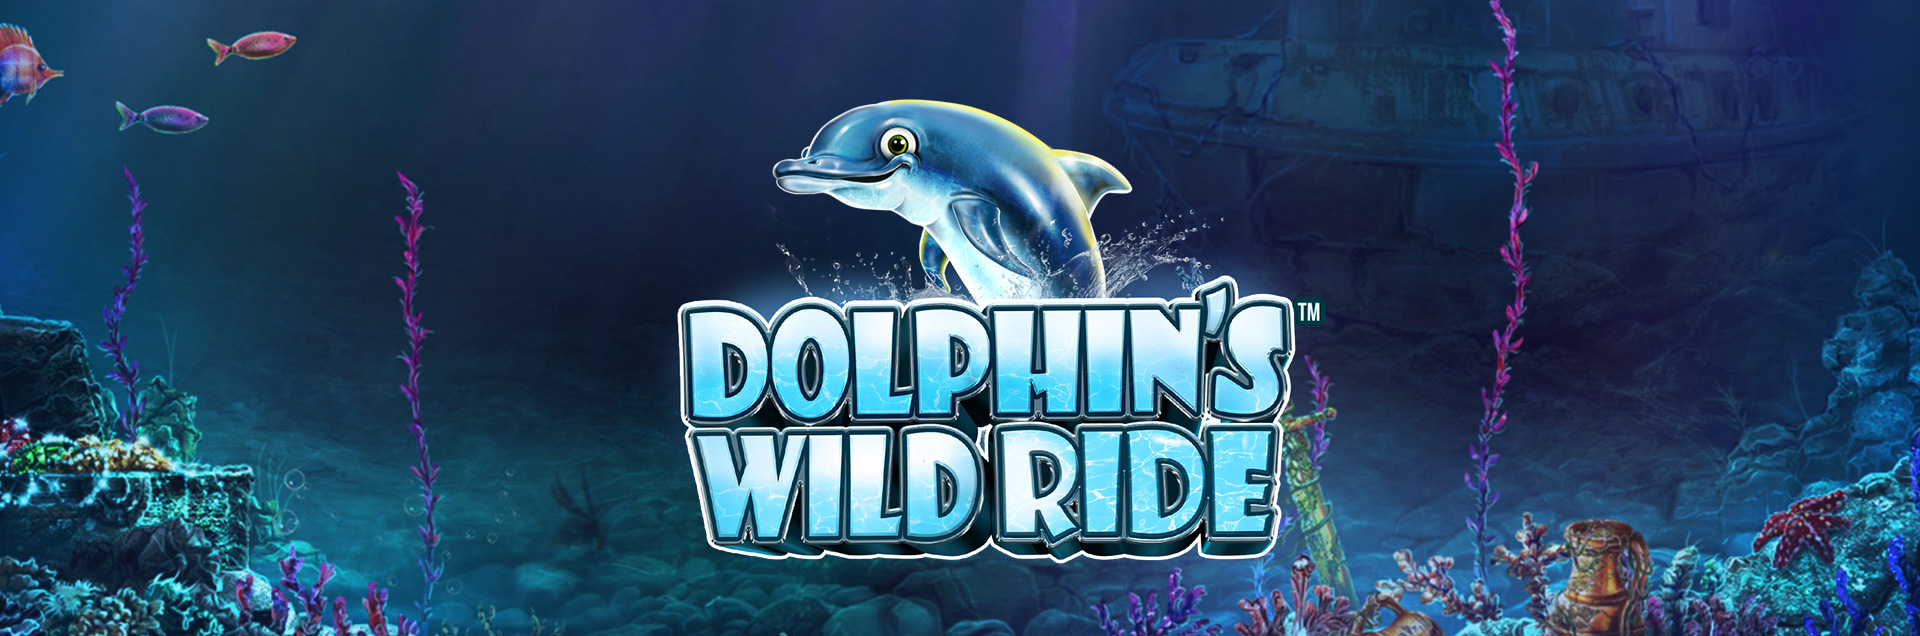 Dolphins Wild Ride header image final